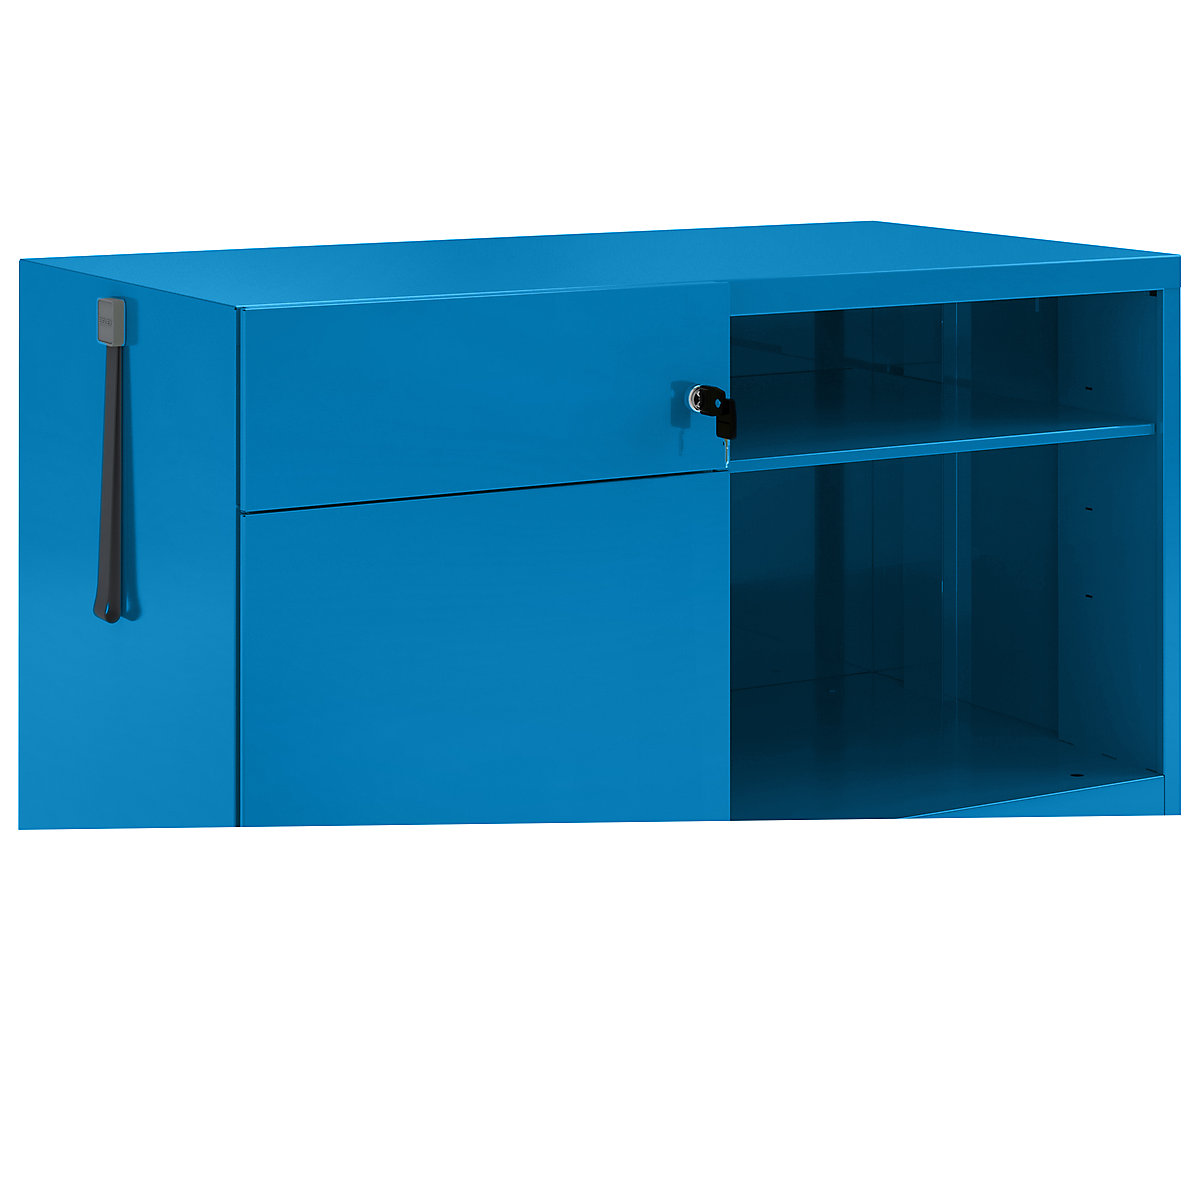 Note™ CADDY, î. x lăț. x ad. 563 x 900 x 490 mm – BISLEY, stânga 1 sertar universal și pentru registratură suspendată, albastru